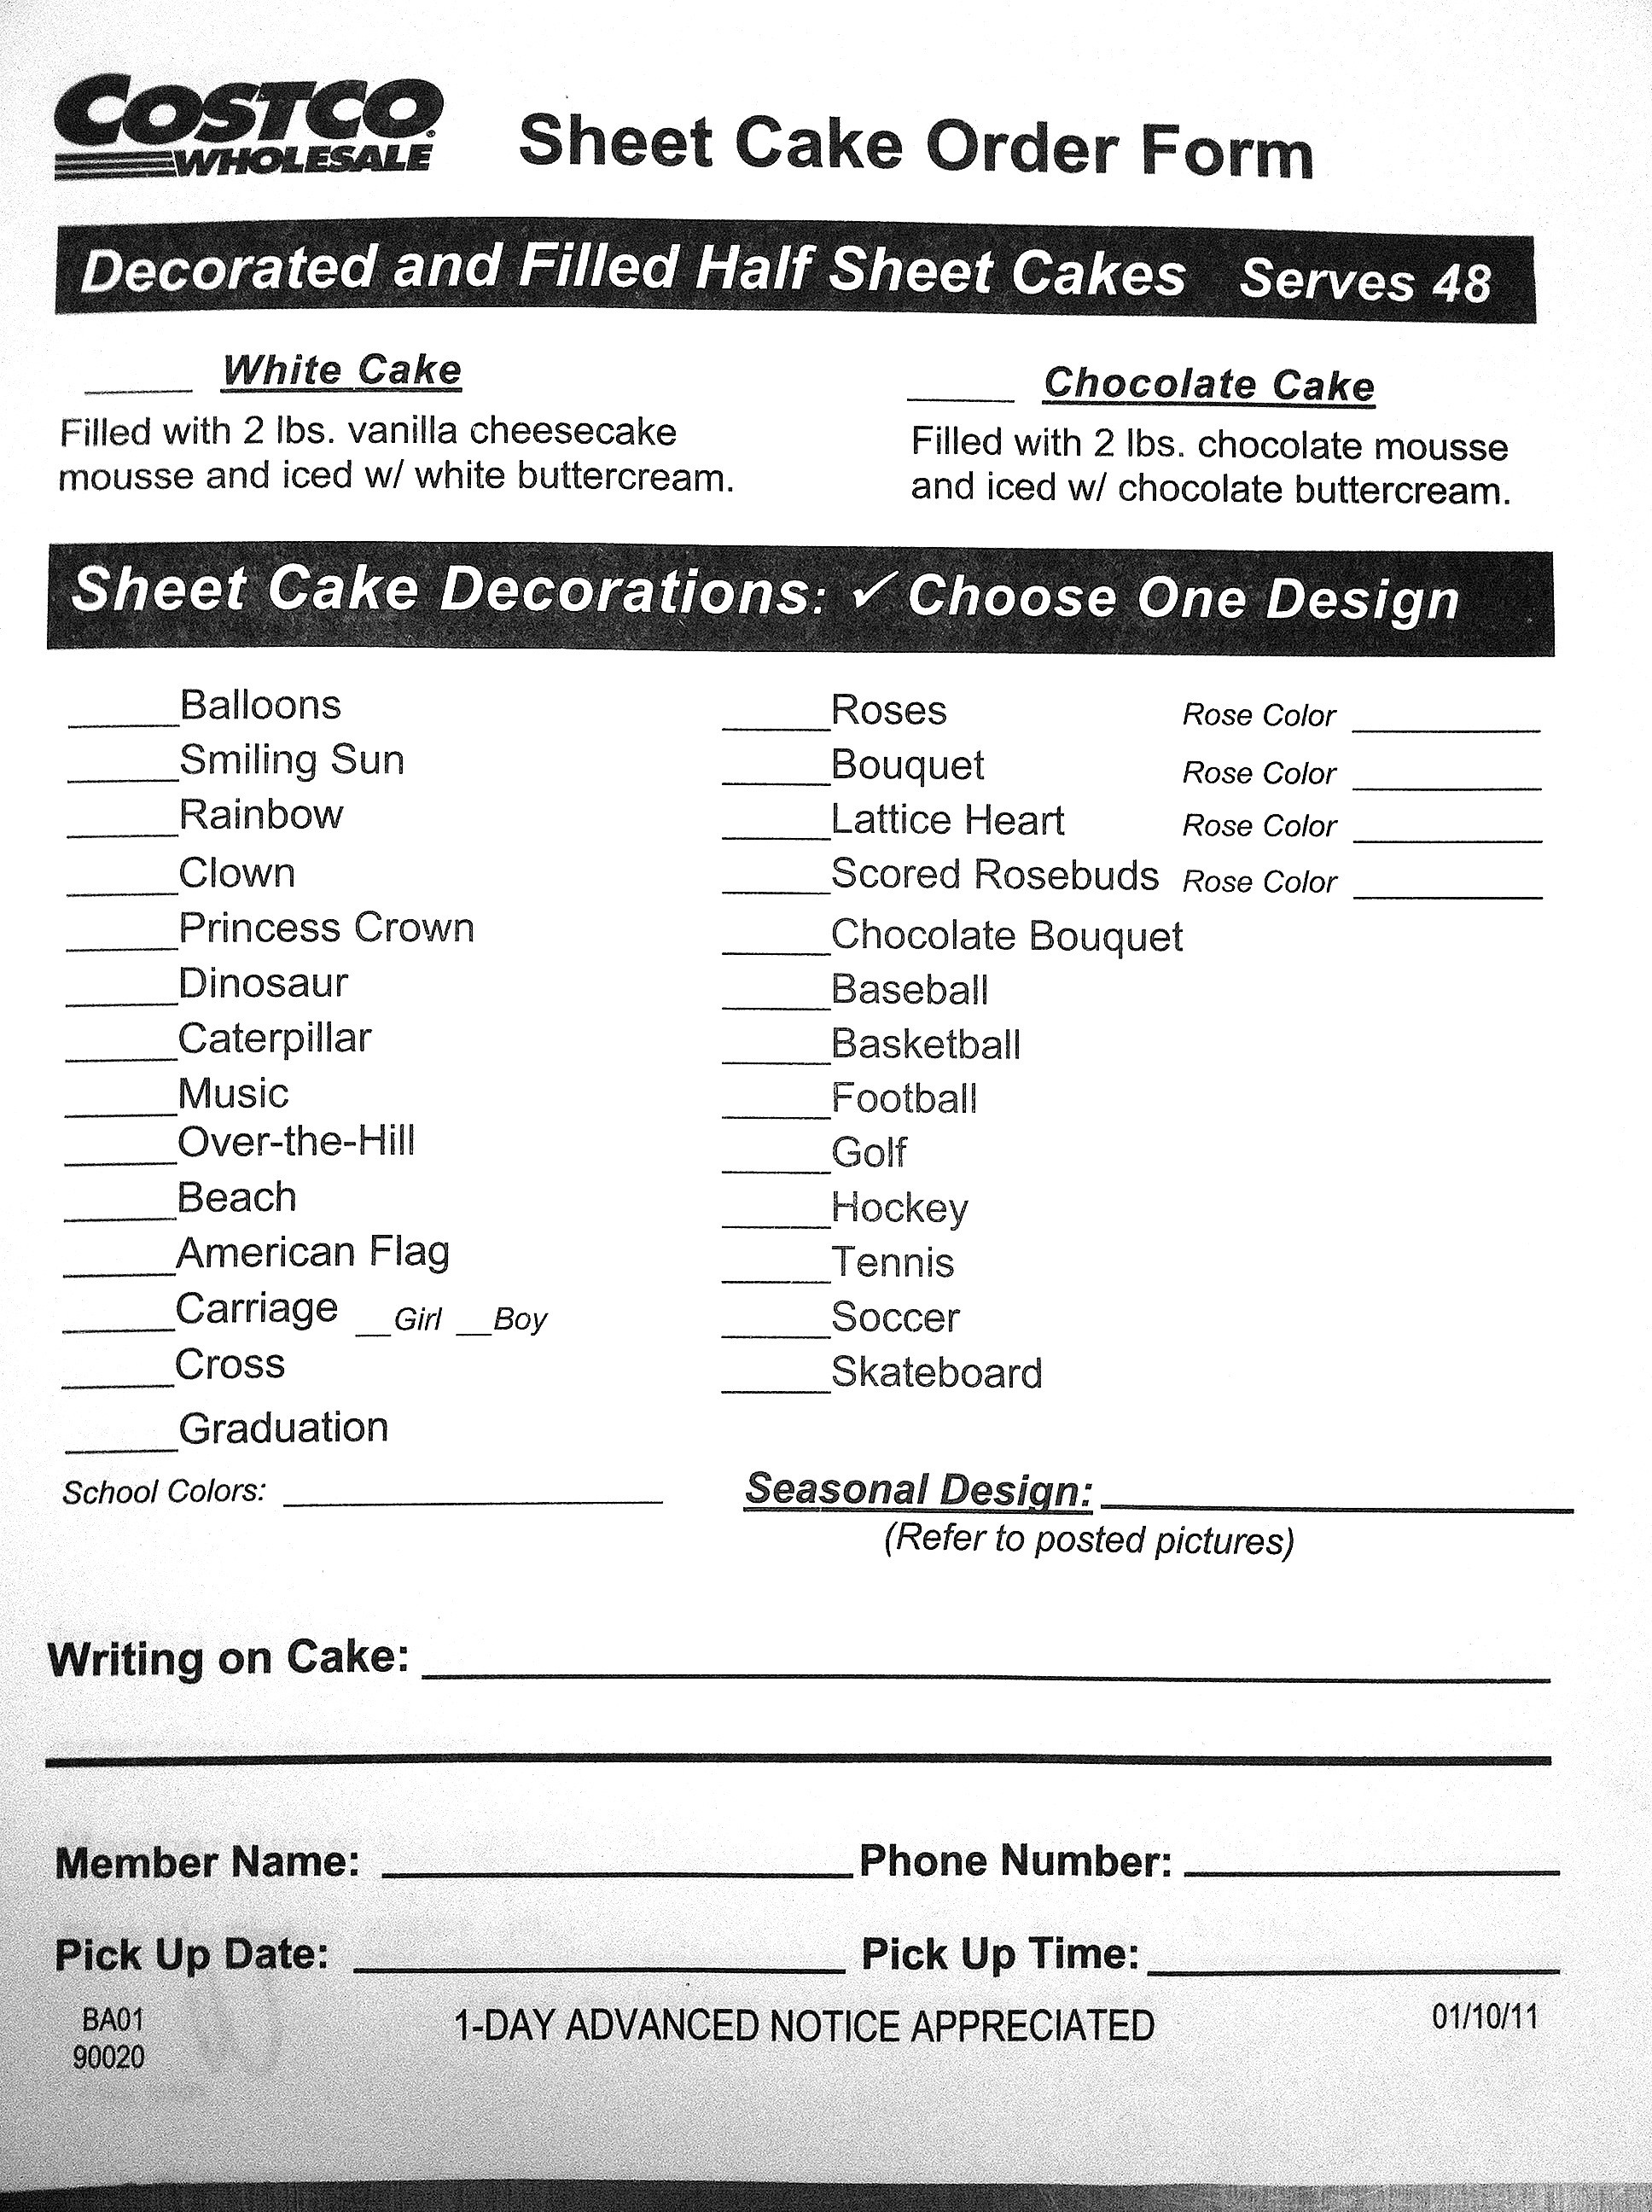 Costco Sheet Cake Size
 Costco US Bakery Sheet Cake Order Form